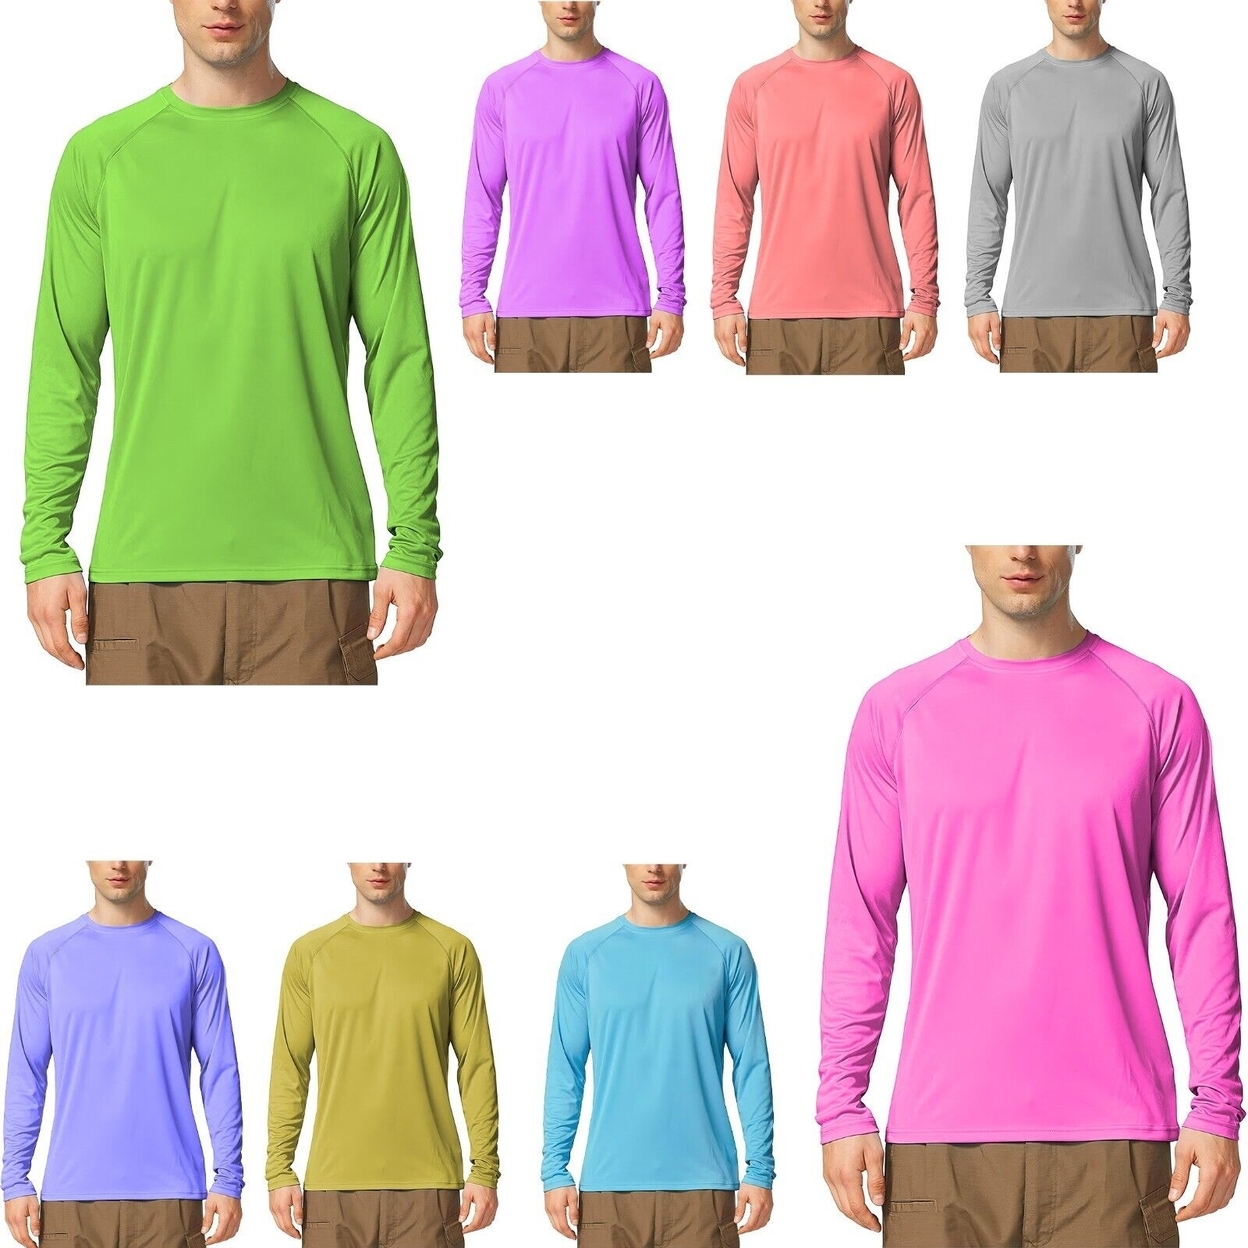 6-Pack: Men's Dri-Fit Moisture Wicking Athletic Cool Performance Slim Fit Long Sleeve T-Shirts - Medium